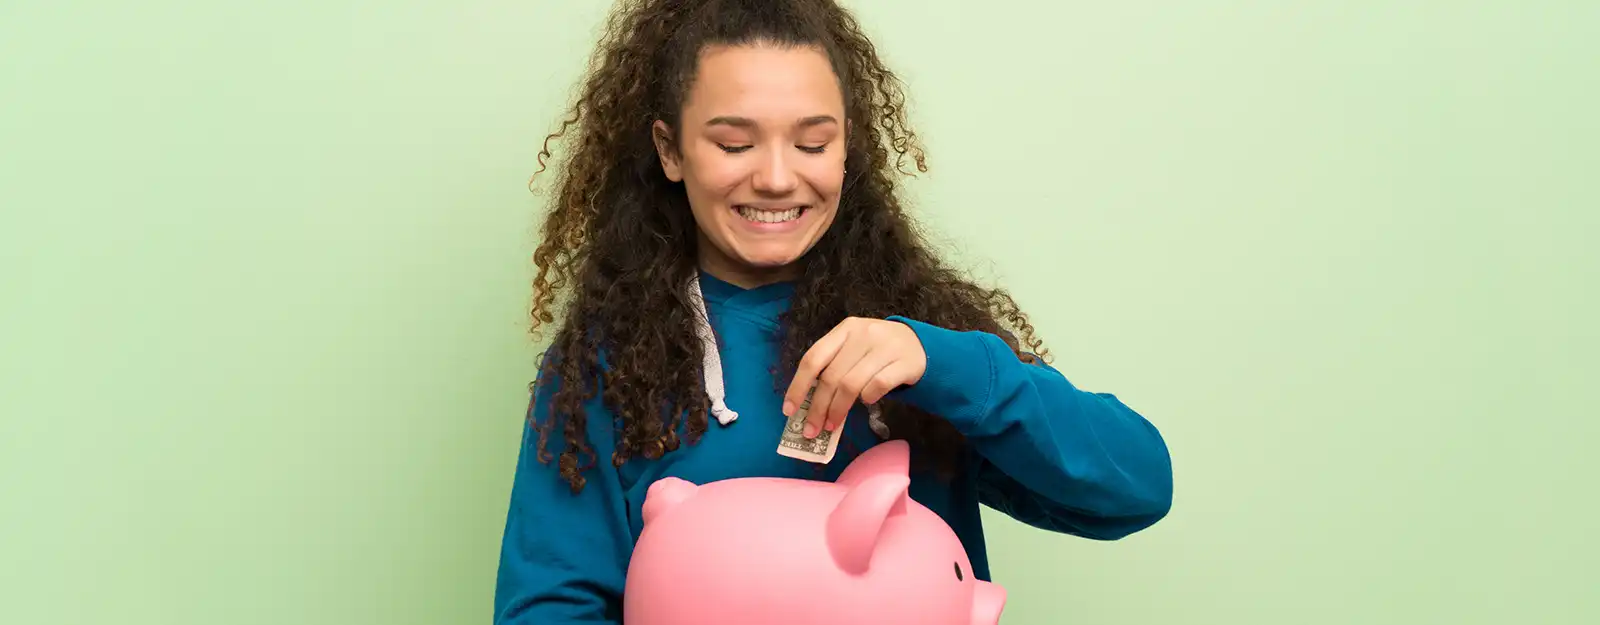 woman holding piggy bank